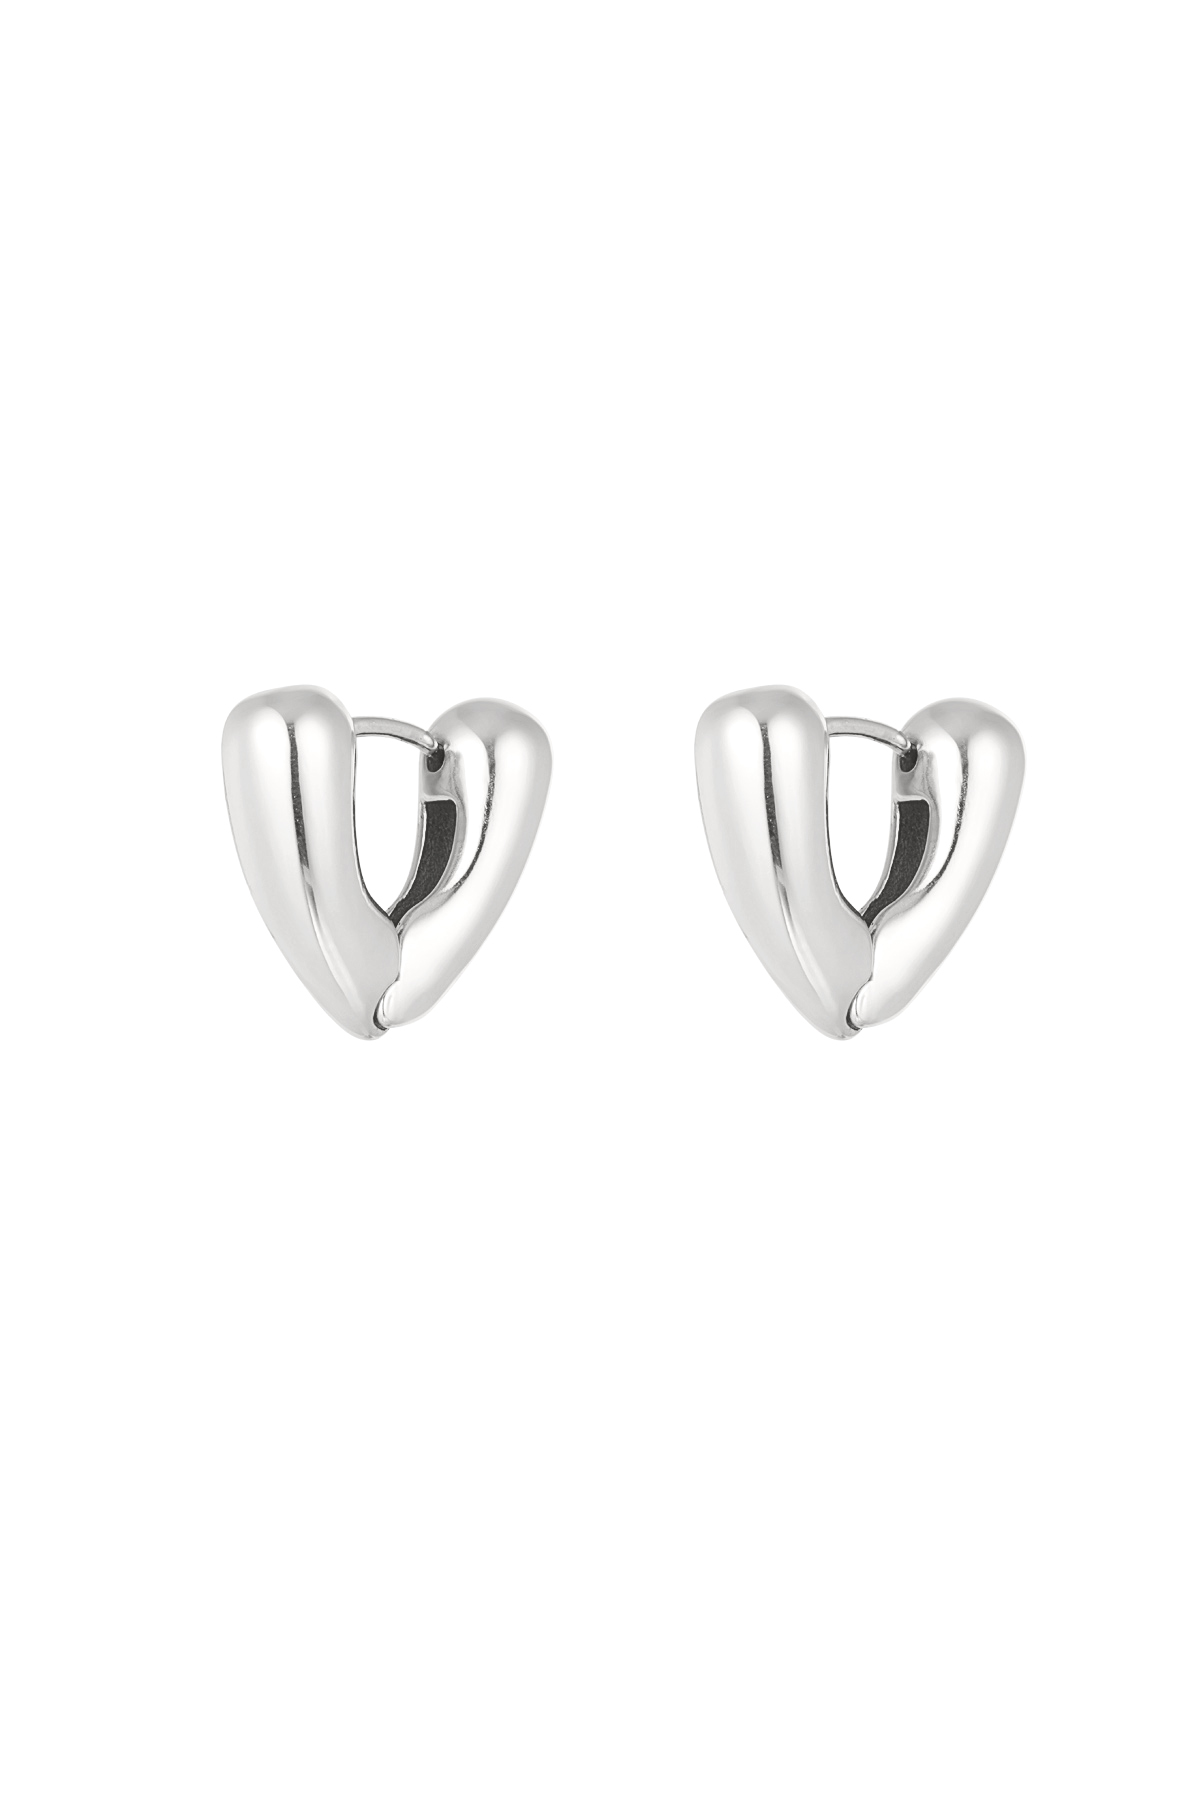 V-shape earrings small - silver